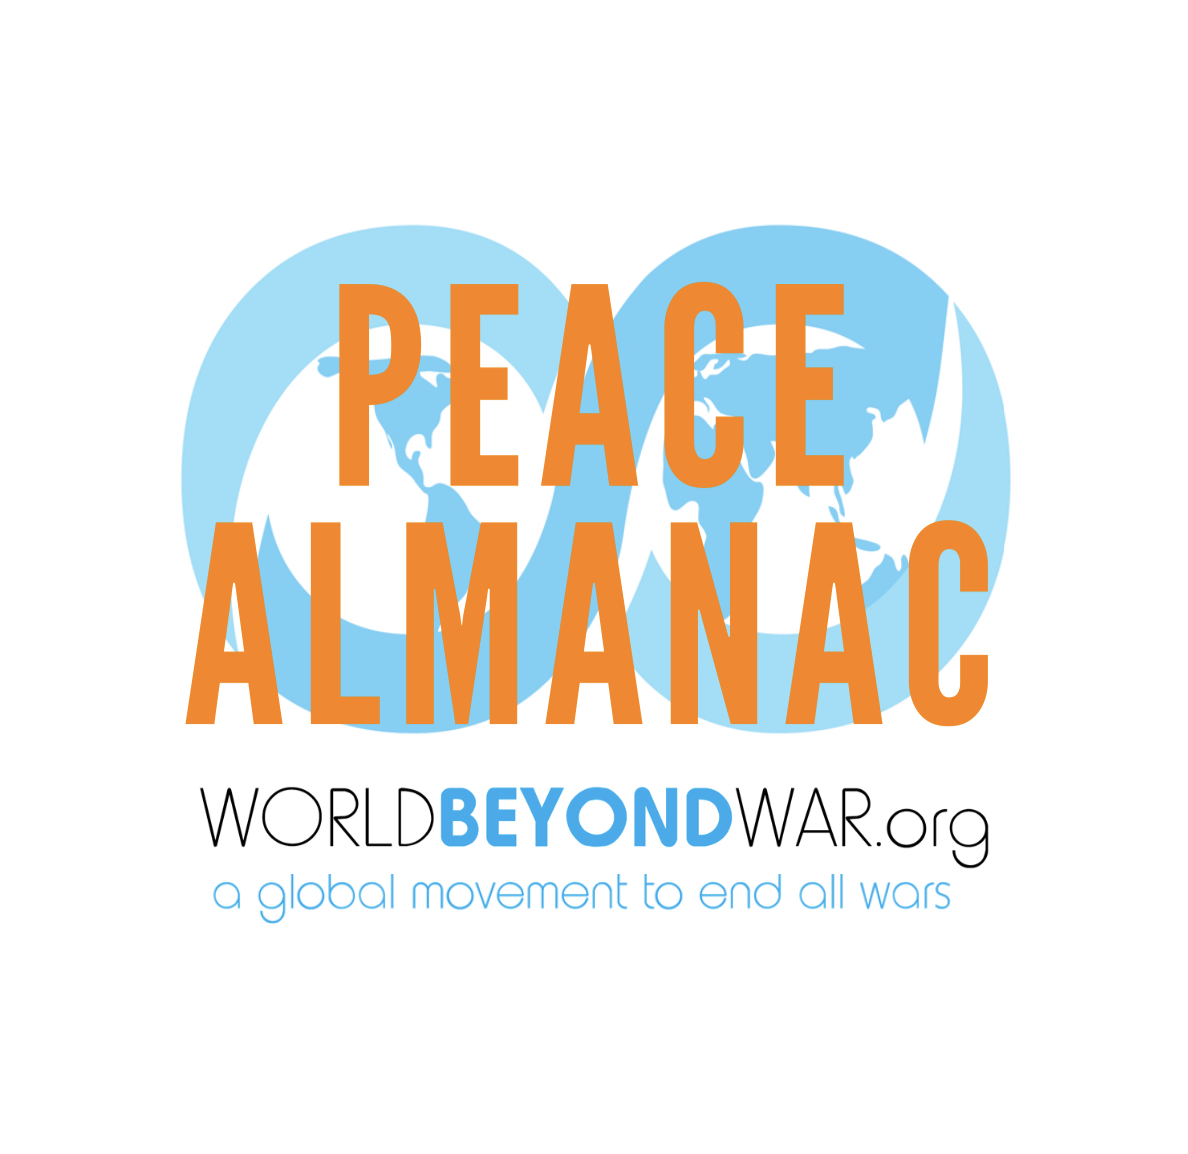 Pace Almanah Iunie Lumea Dincolo De Razboi